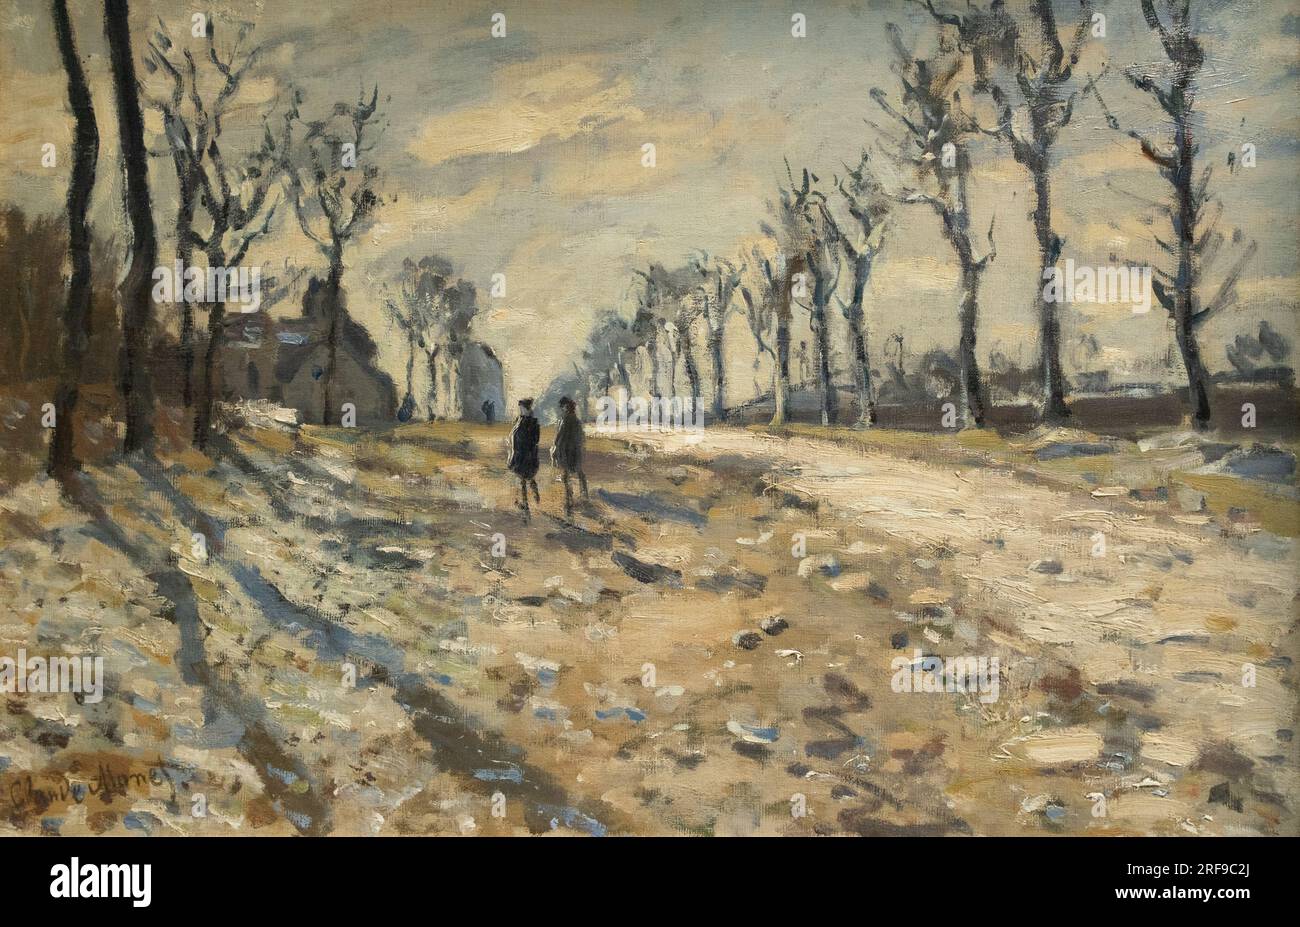 Claude Monet painting; 'Route, Effet de Neige, Soleil couchant' - Road, snow and sunset, 1864; Monet landscape; 19th century French impressionist Stock Photo